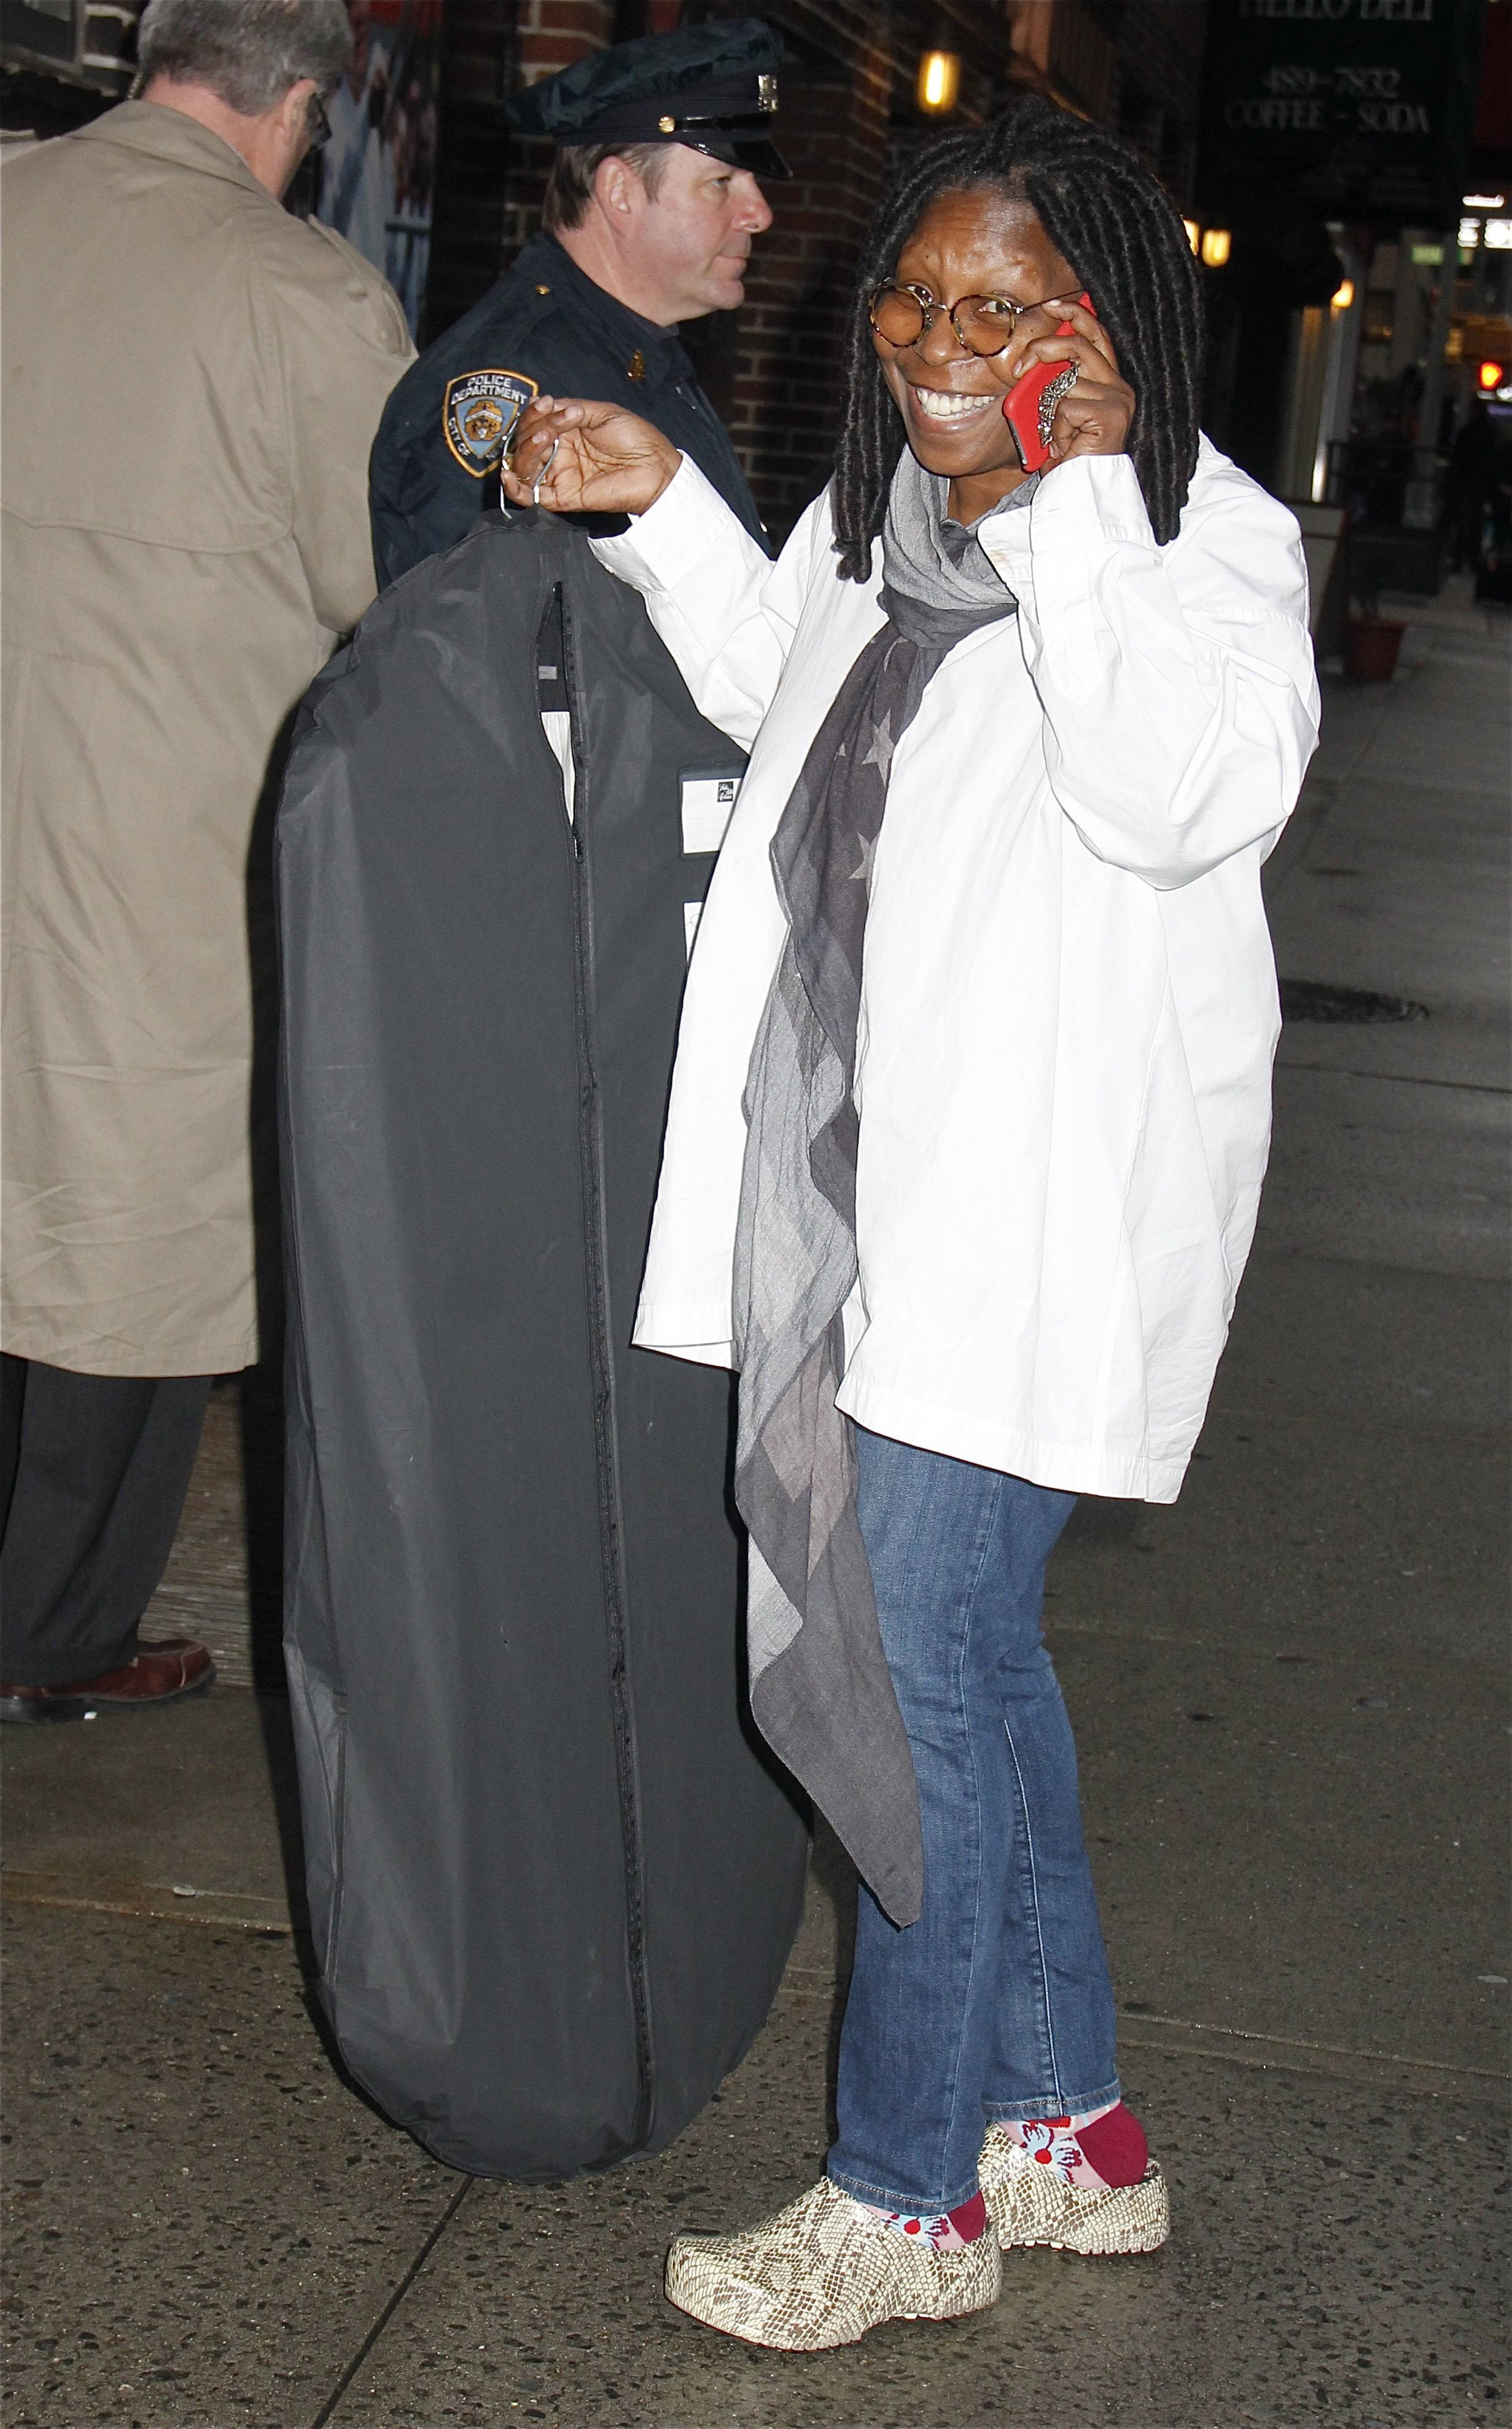 Kanye West Photo: Kanye West: Snakeskin Backpack in NYC